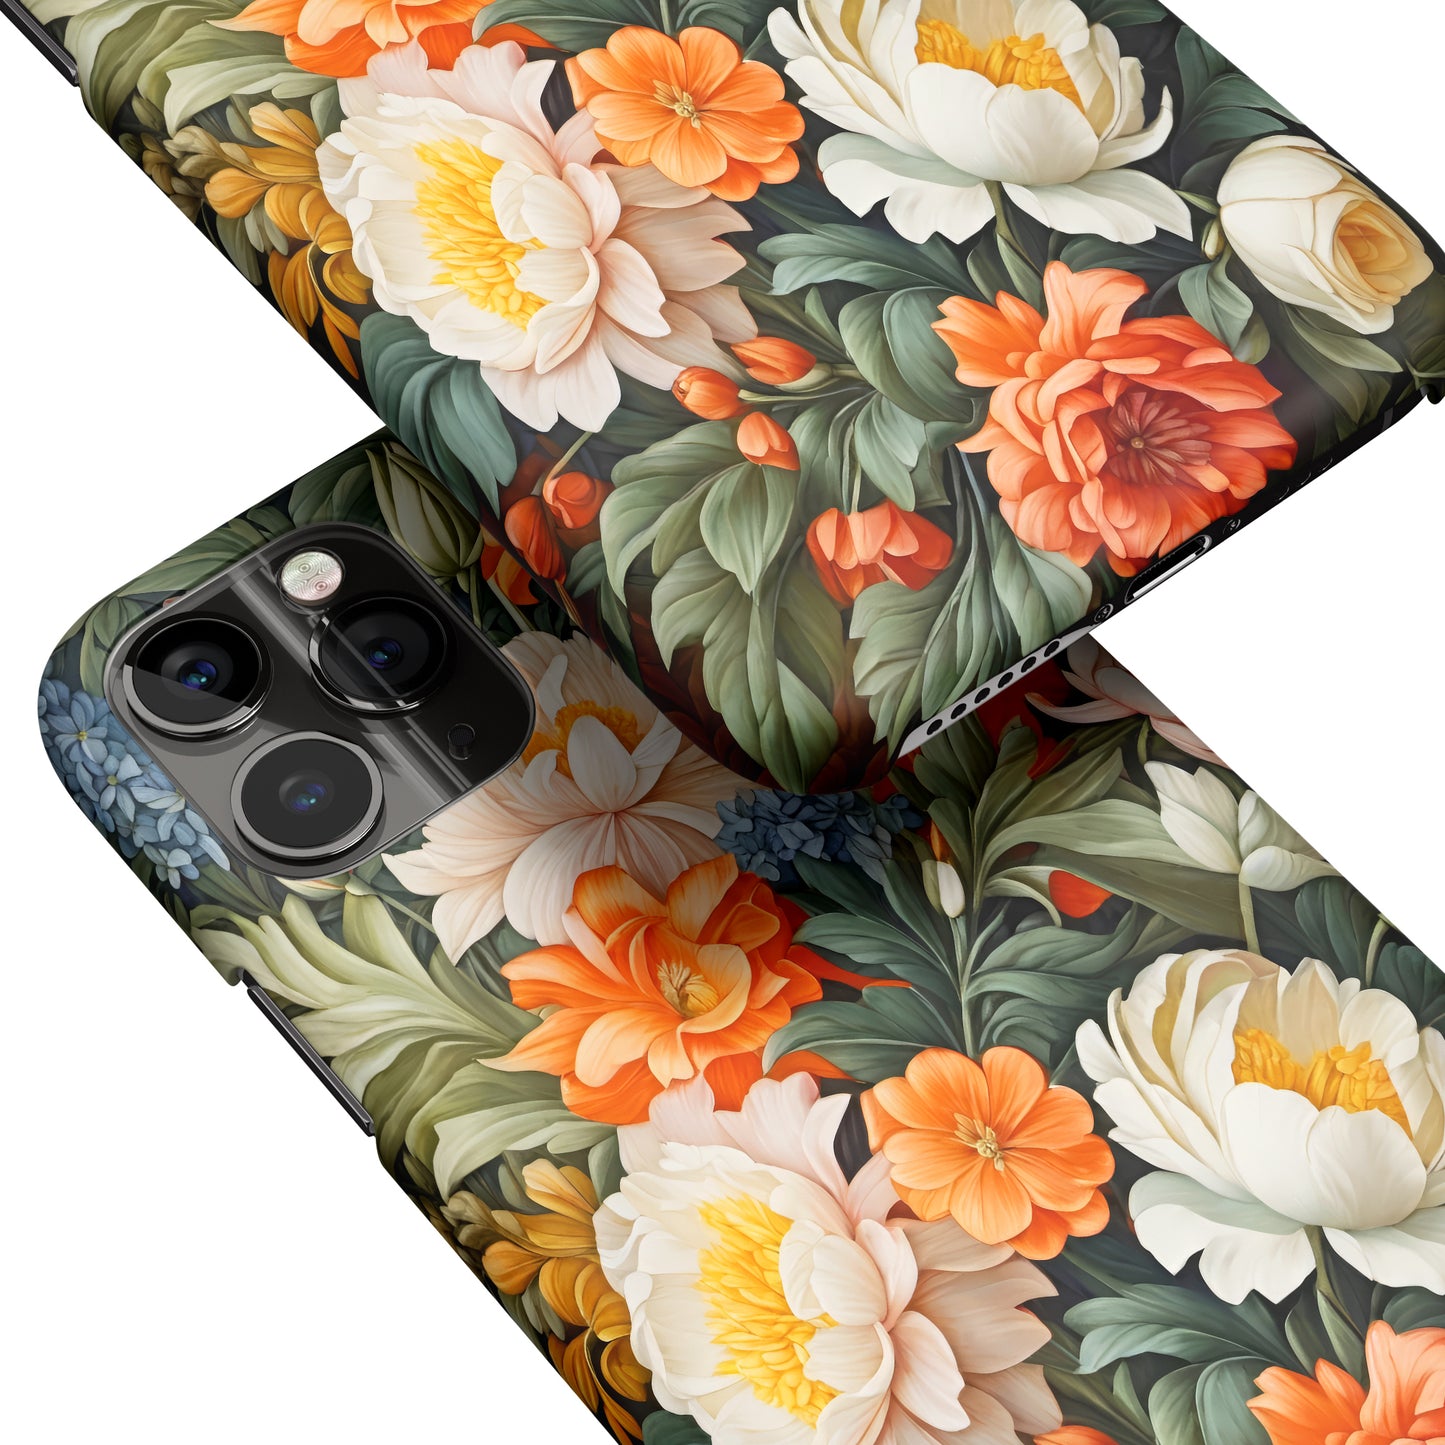 Vintage Floral Painting iPhone Case